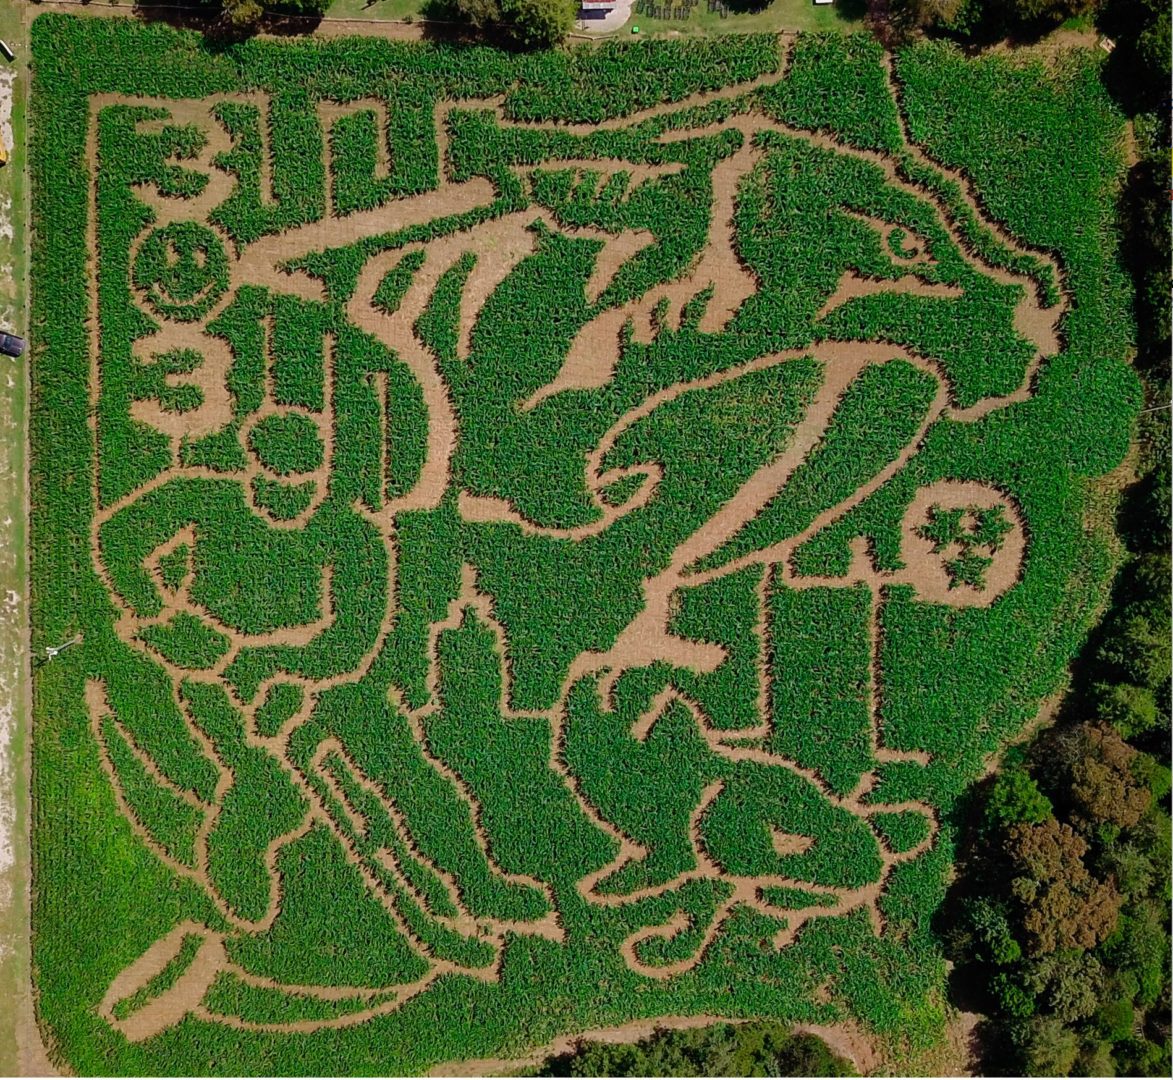 Lucky Ladd Farms Nashville Predators themed corn maze at their family festival!